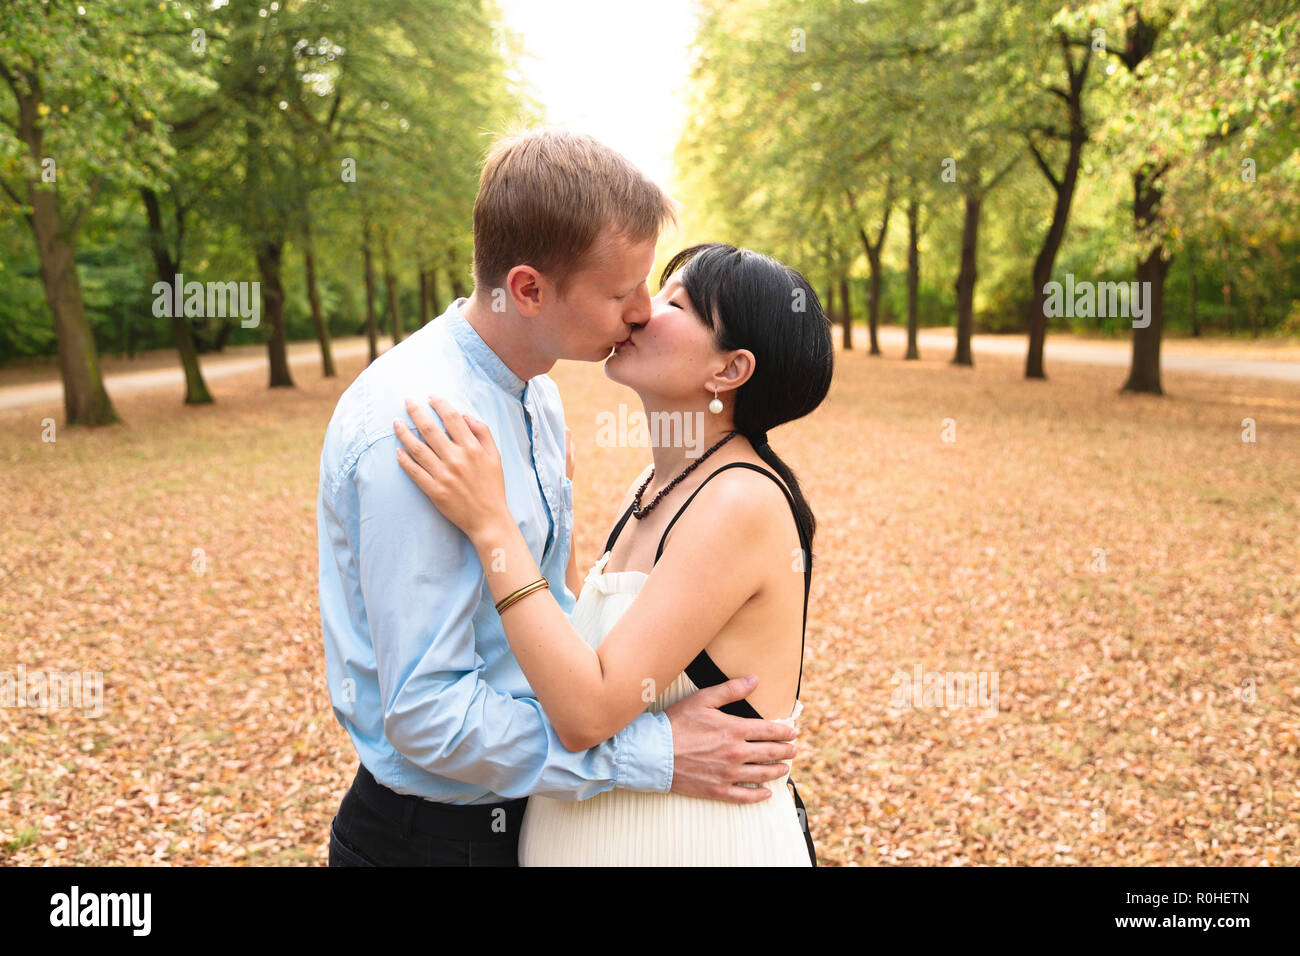 https://c8.alamy.com/comp/R0HETN/international-couple-in-love-in-beautiful-park-with-passion-kiss-R0HETN.jpg